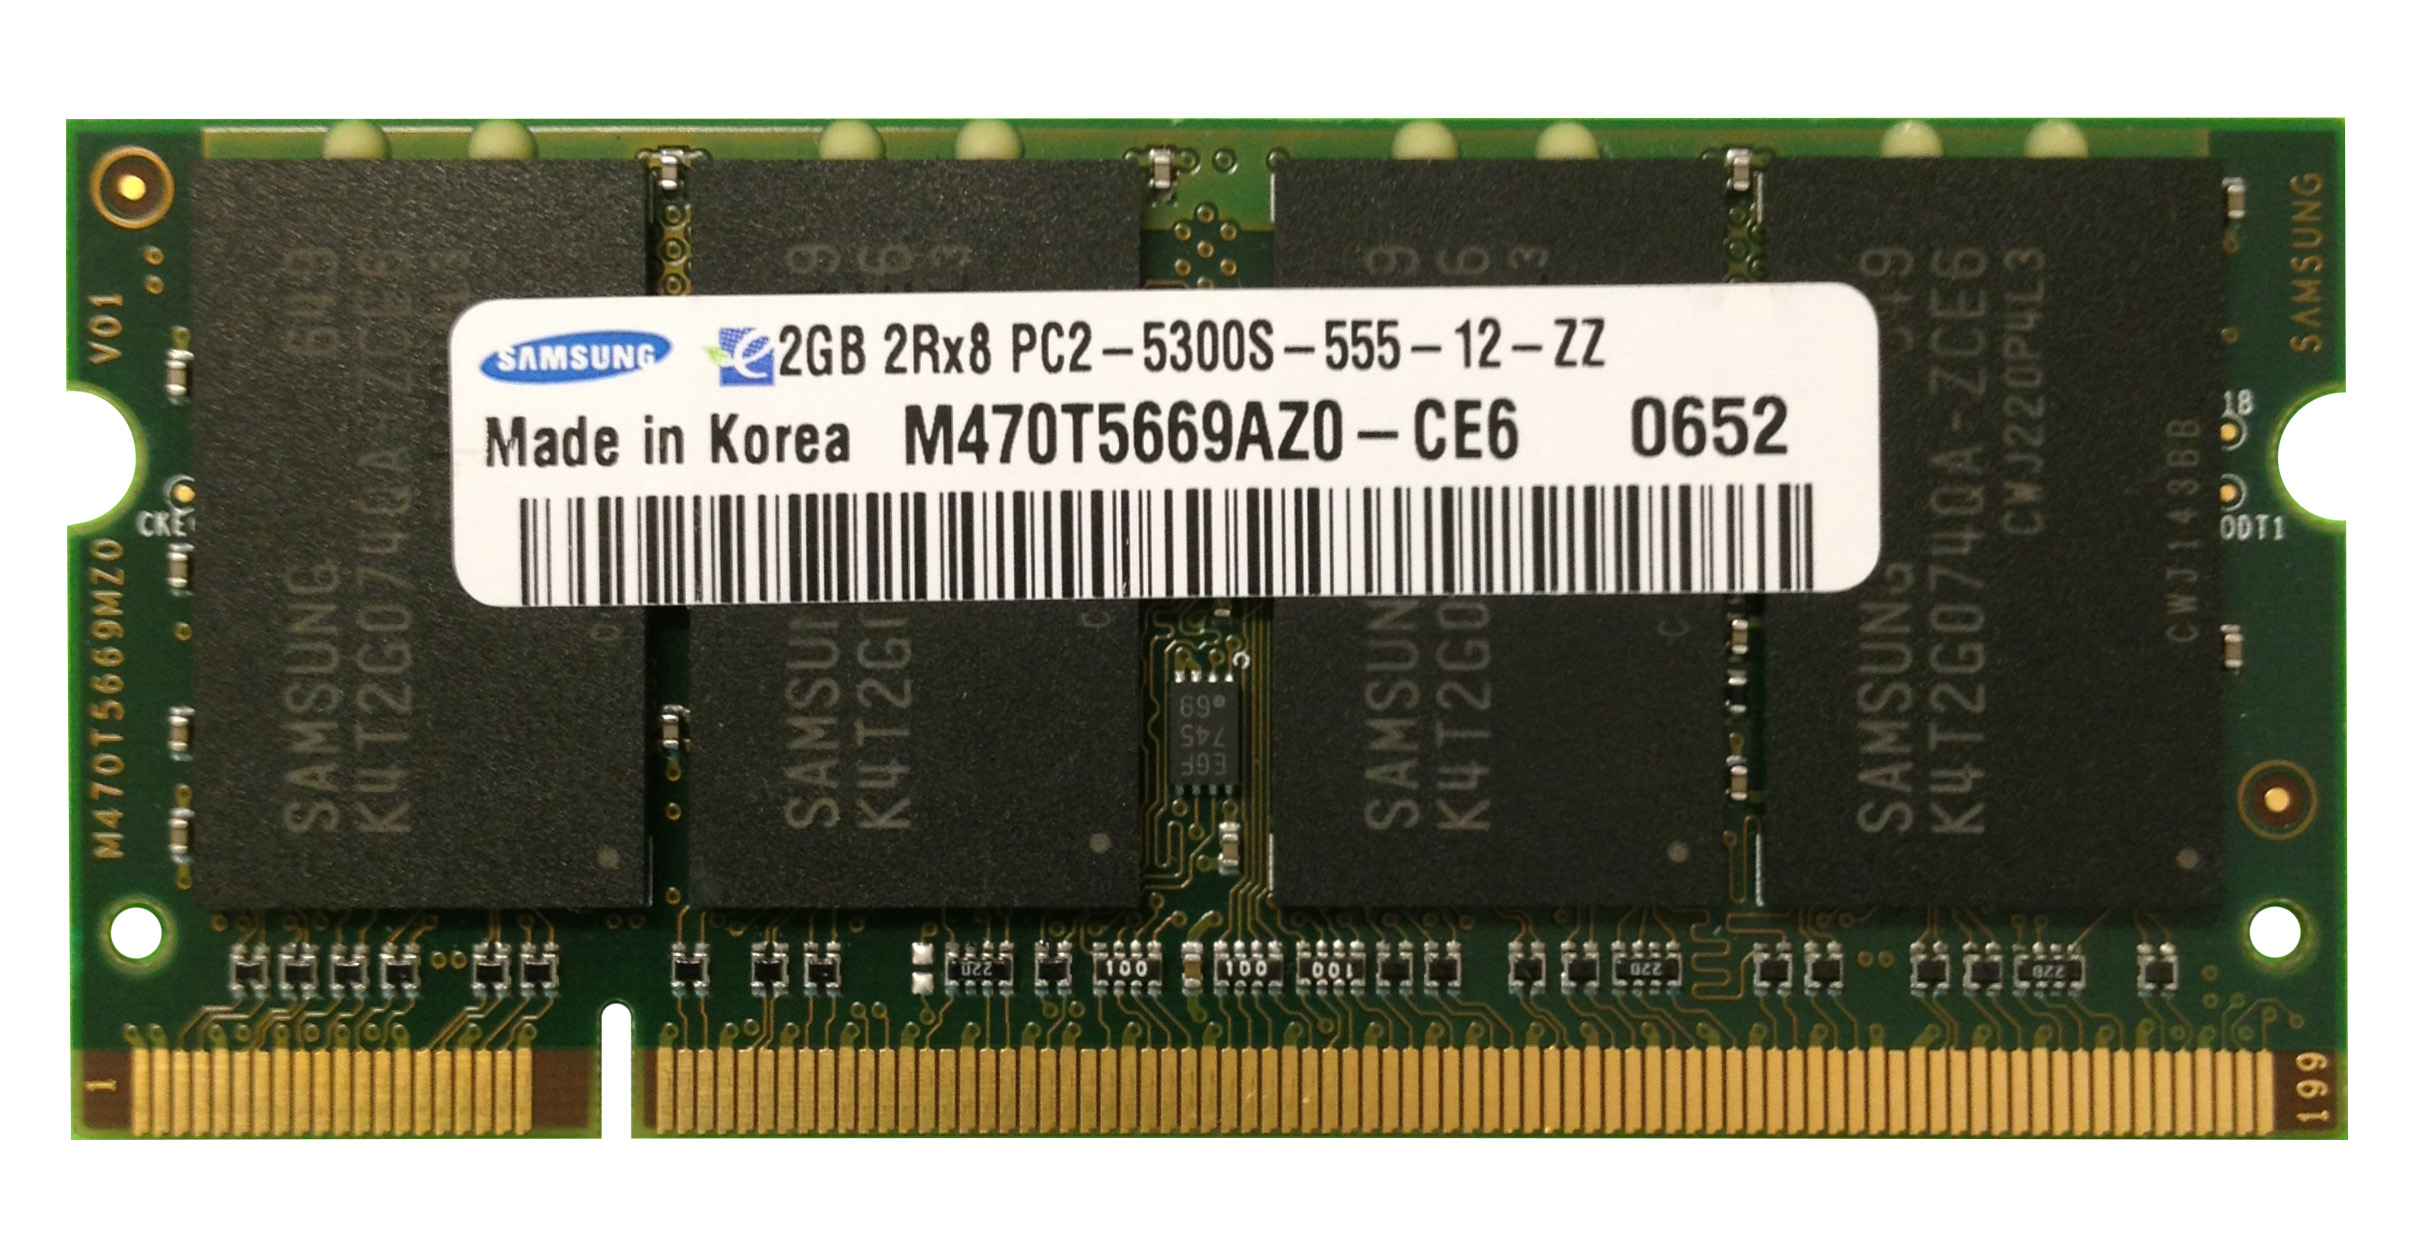 3D-12D240N64S072-2G 2GB Module DDR2 SoDimm 200-Pin PC2-5300 CL=5 non-ECC Unbuffered DDR2-667 1.8V 256Meg x 64 for Asus A8SN-CF Motherboard n/a